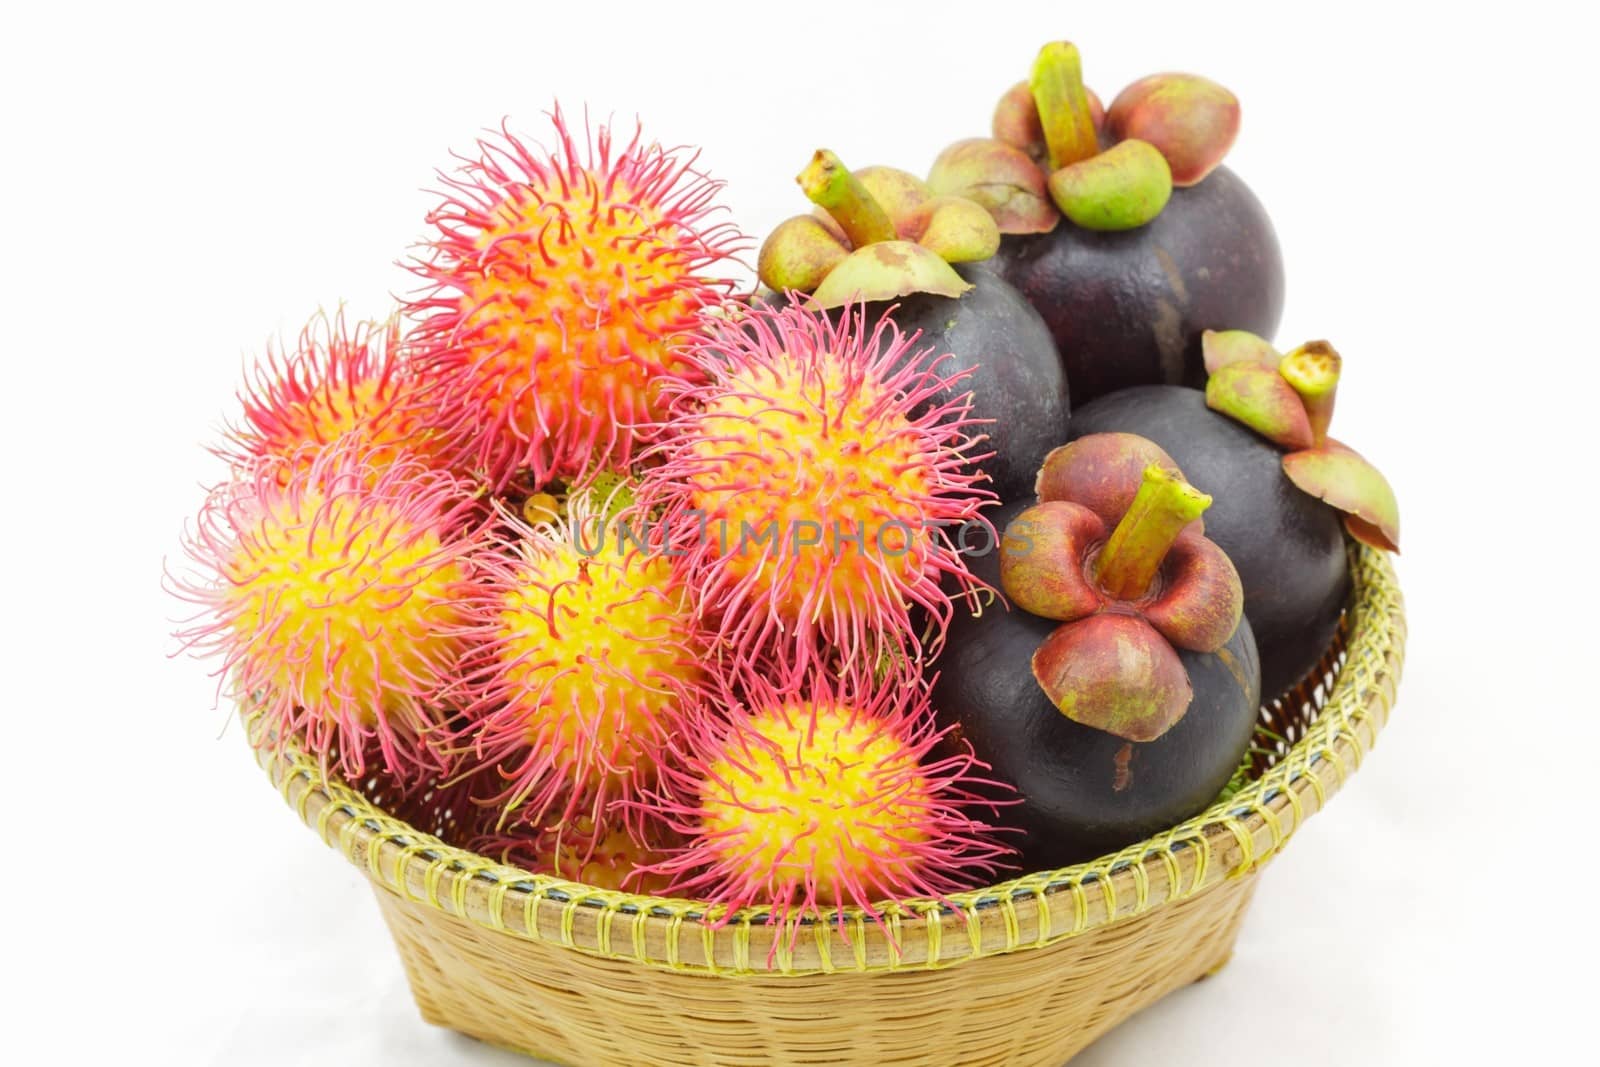 Organic rambutan and mangosteen Thai fruits in wicker basket. by ngungfoto